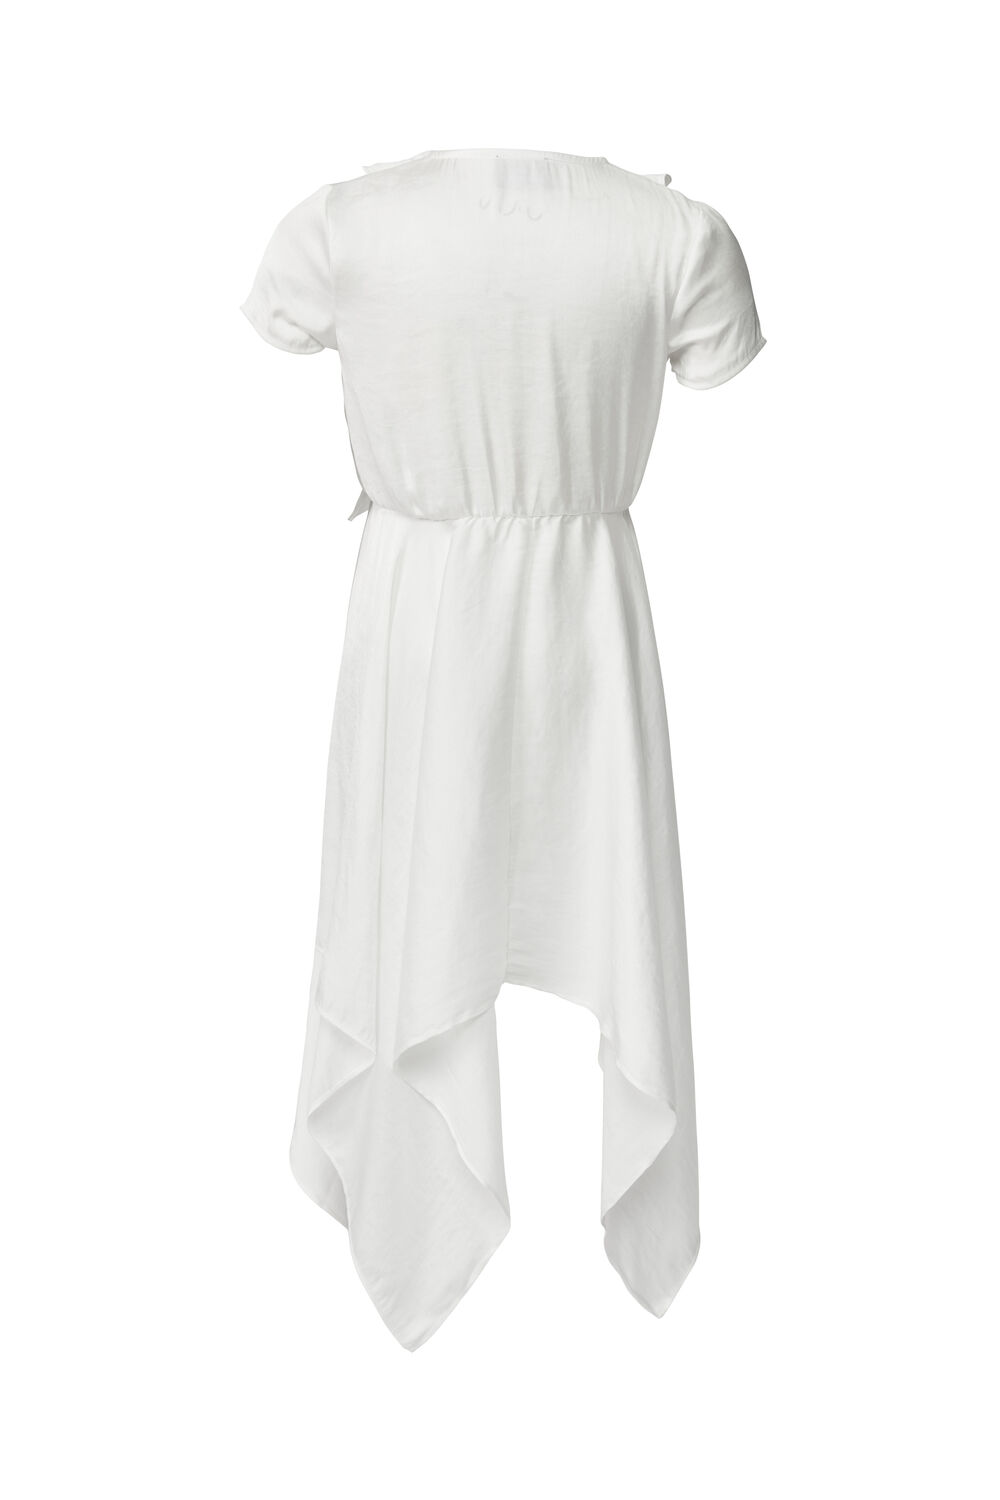 GIRLS CARTER HANKY DRESS in colour BRIGHT WHITE